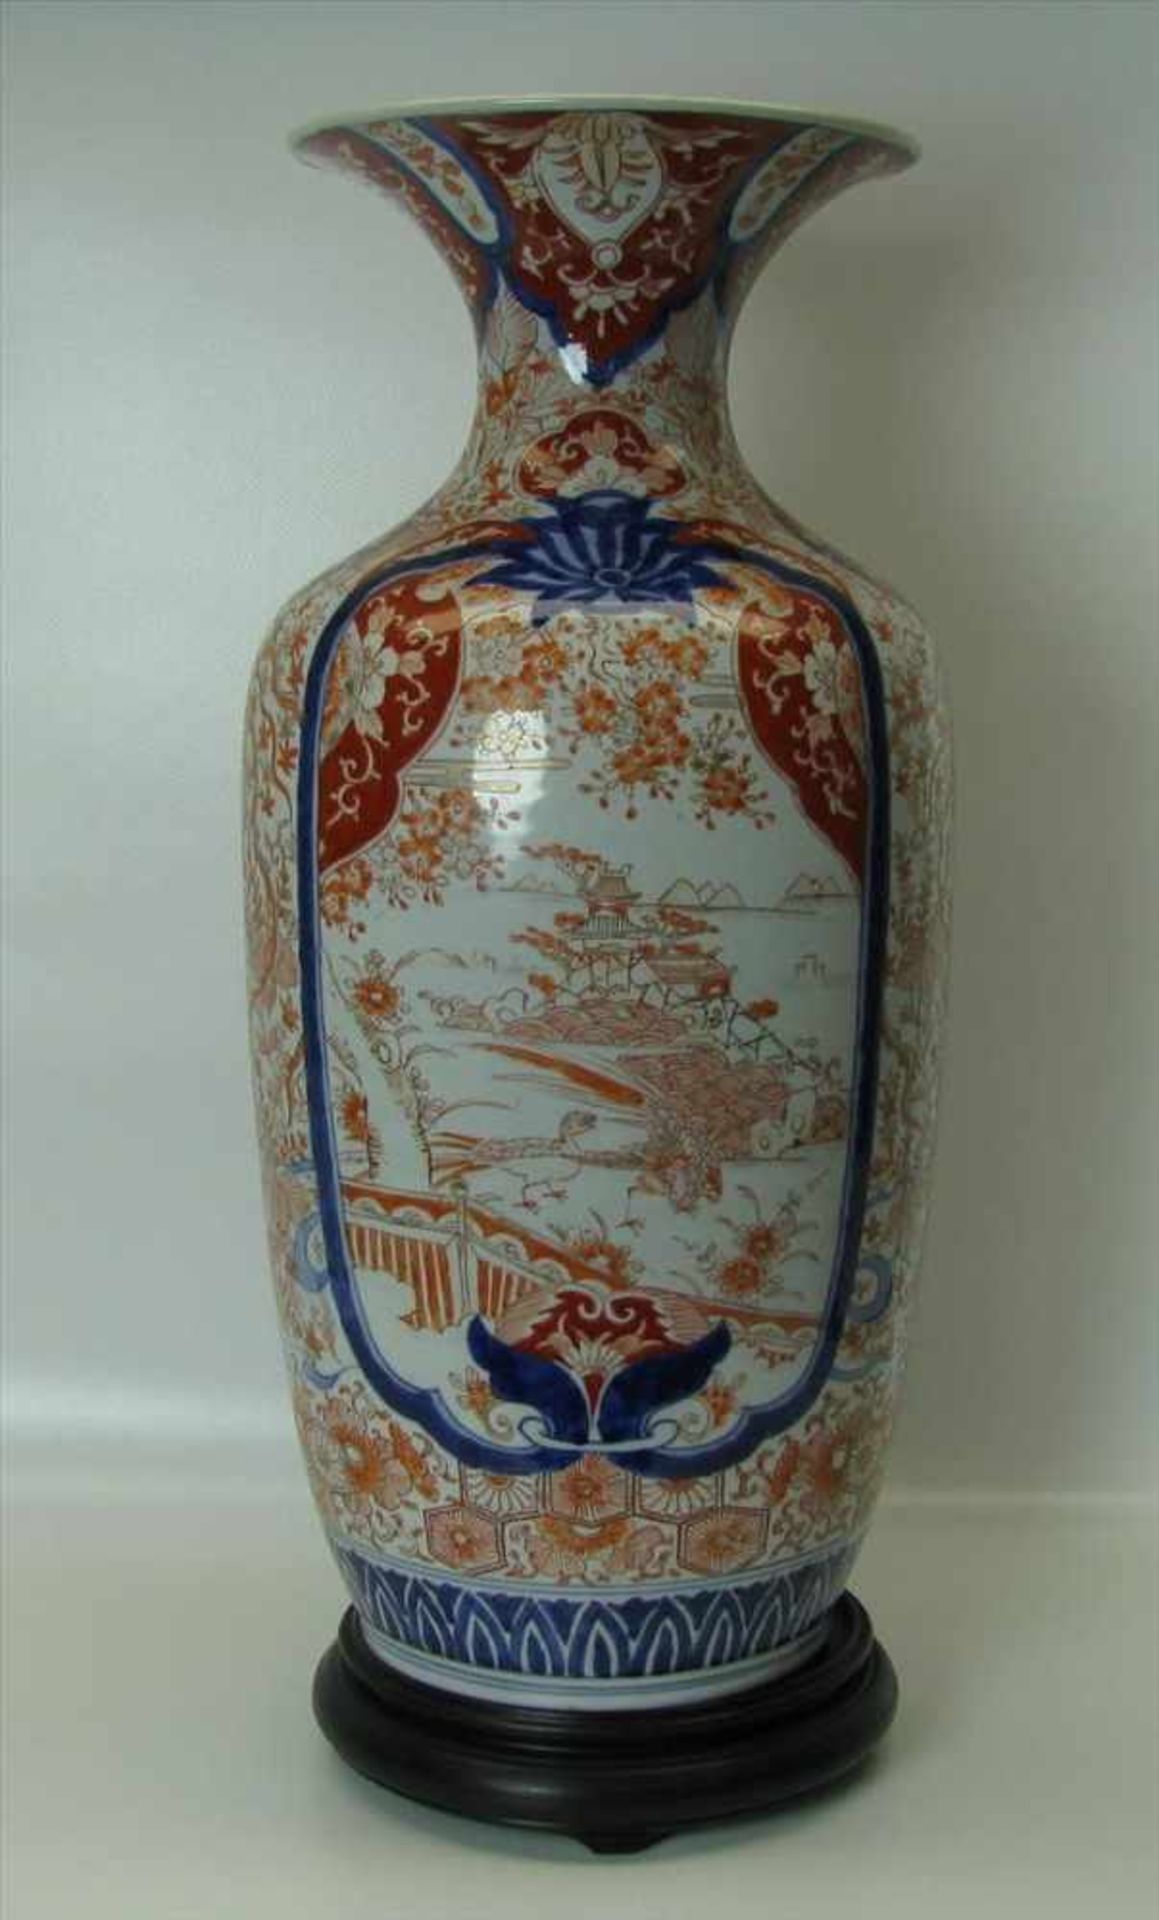 Vase, Japan, Imari, 19. Jahrhundert, Weißporzellan mit polychromer Bemalung, h 44 cm, d 22,5 cm. - Image 2 of 2